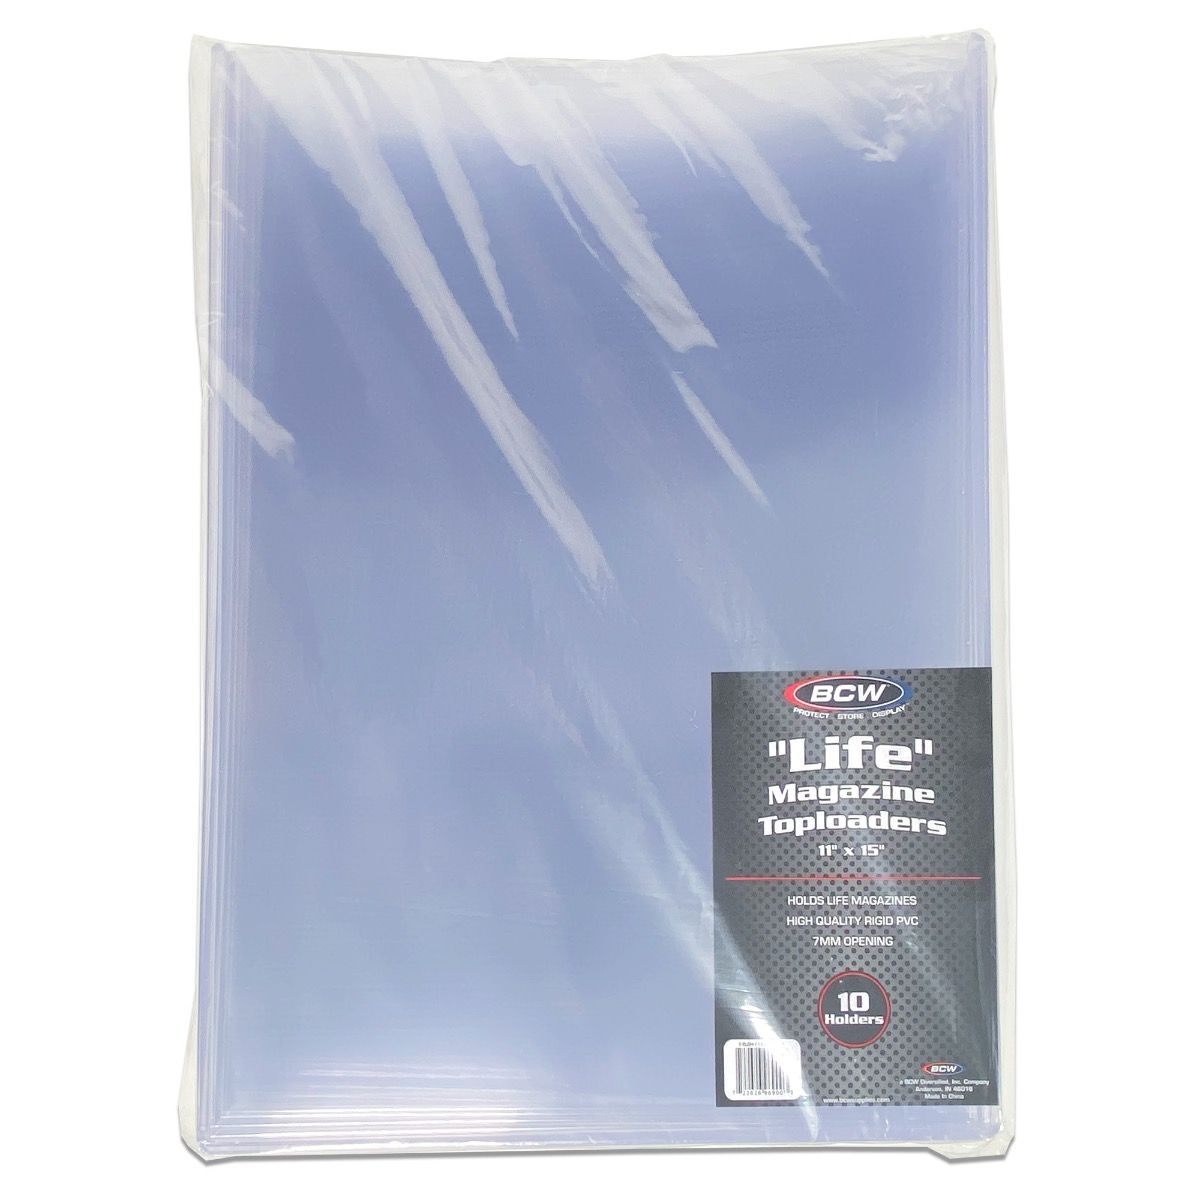 (5) Life Magazine Topload Holders - Rigid Plastic Sleeves - BCW Brand